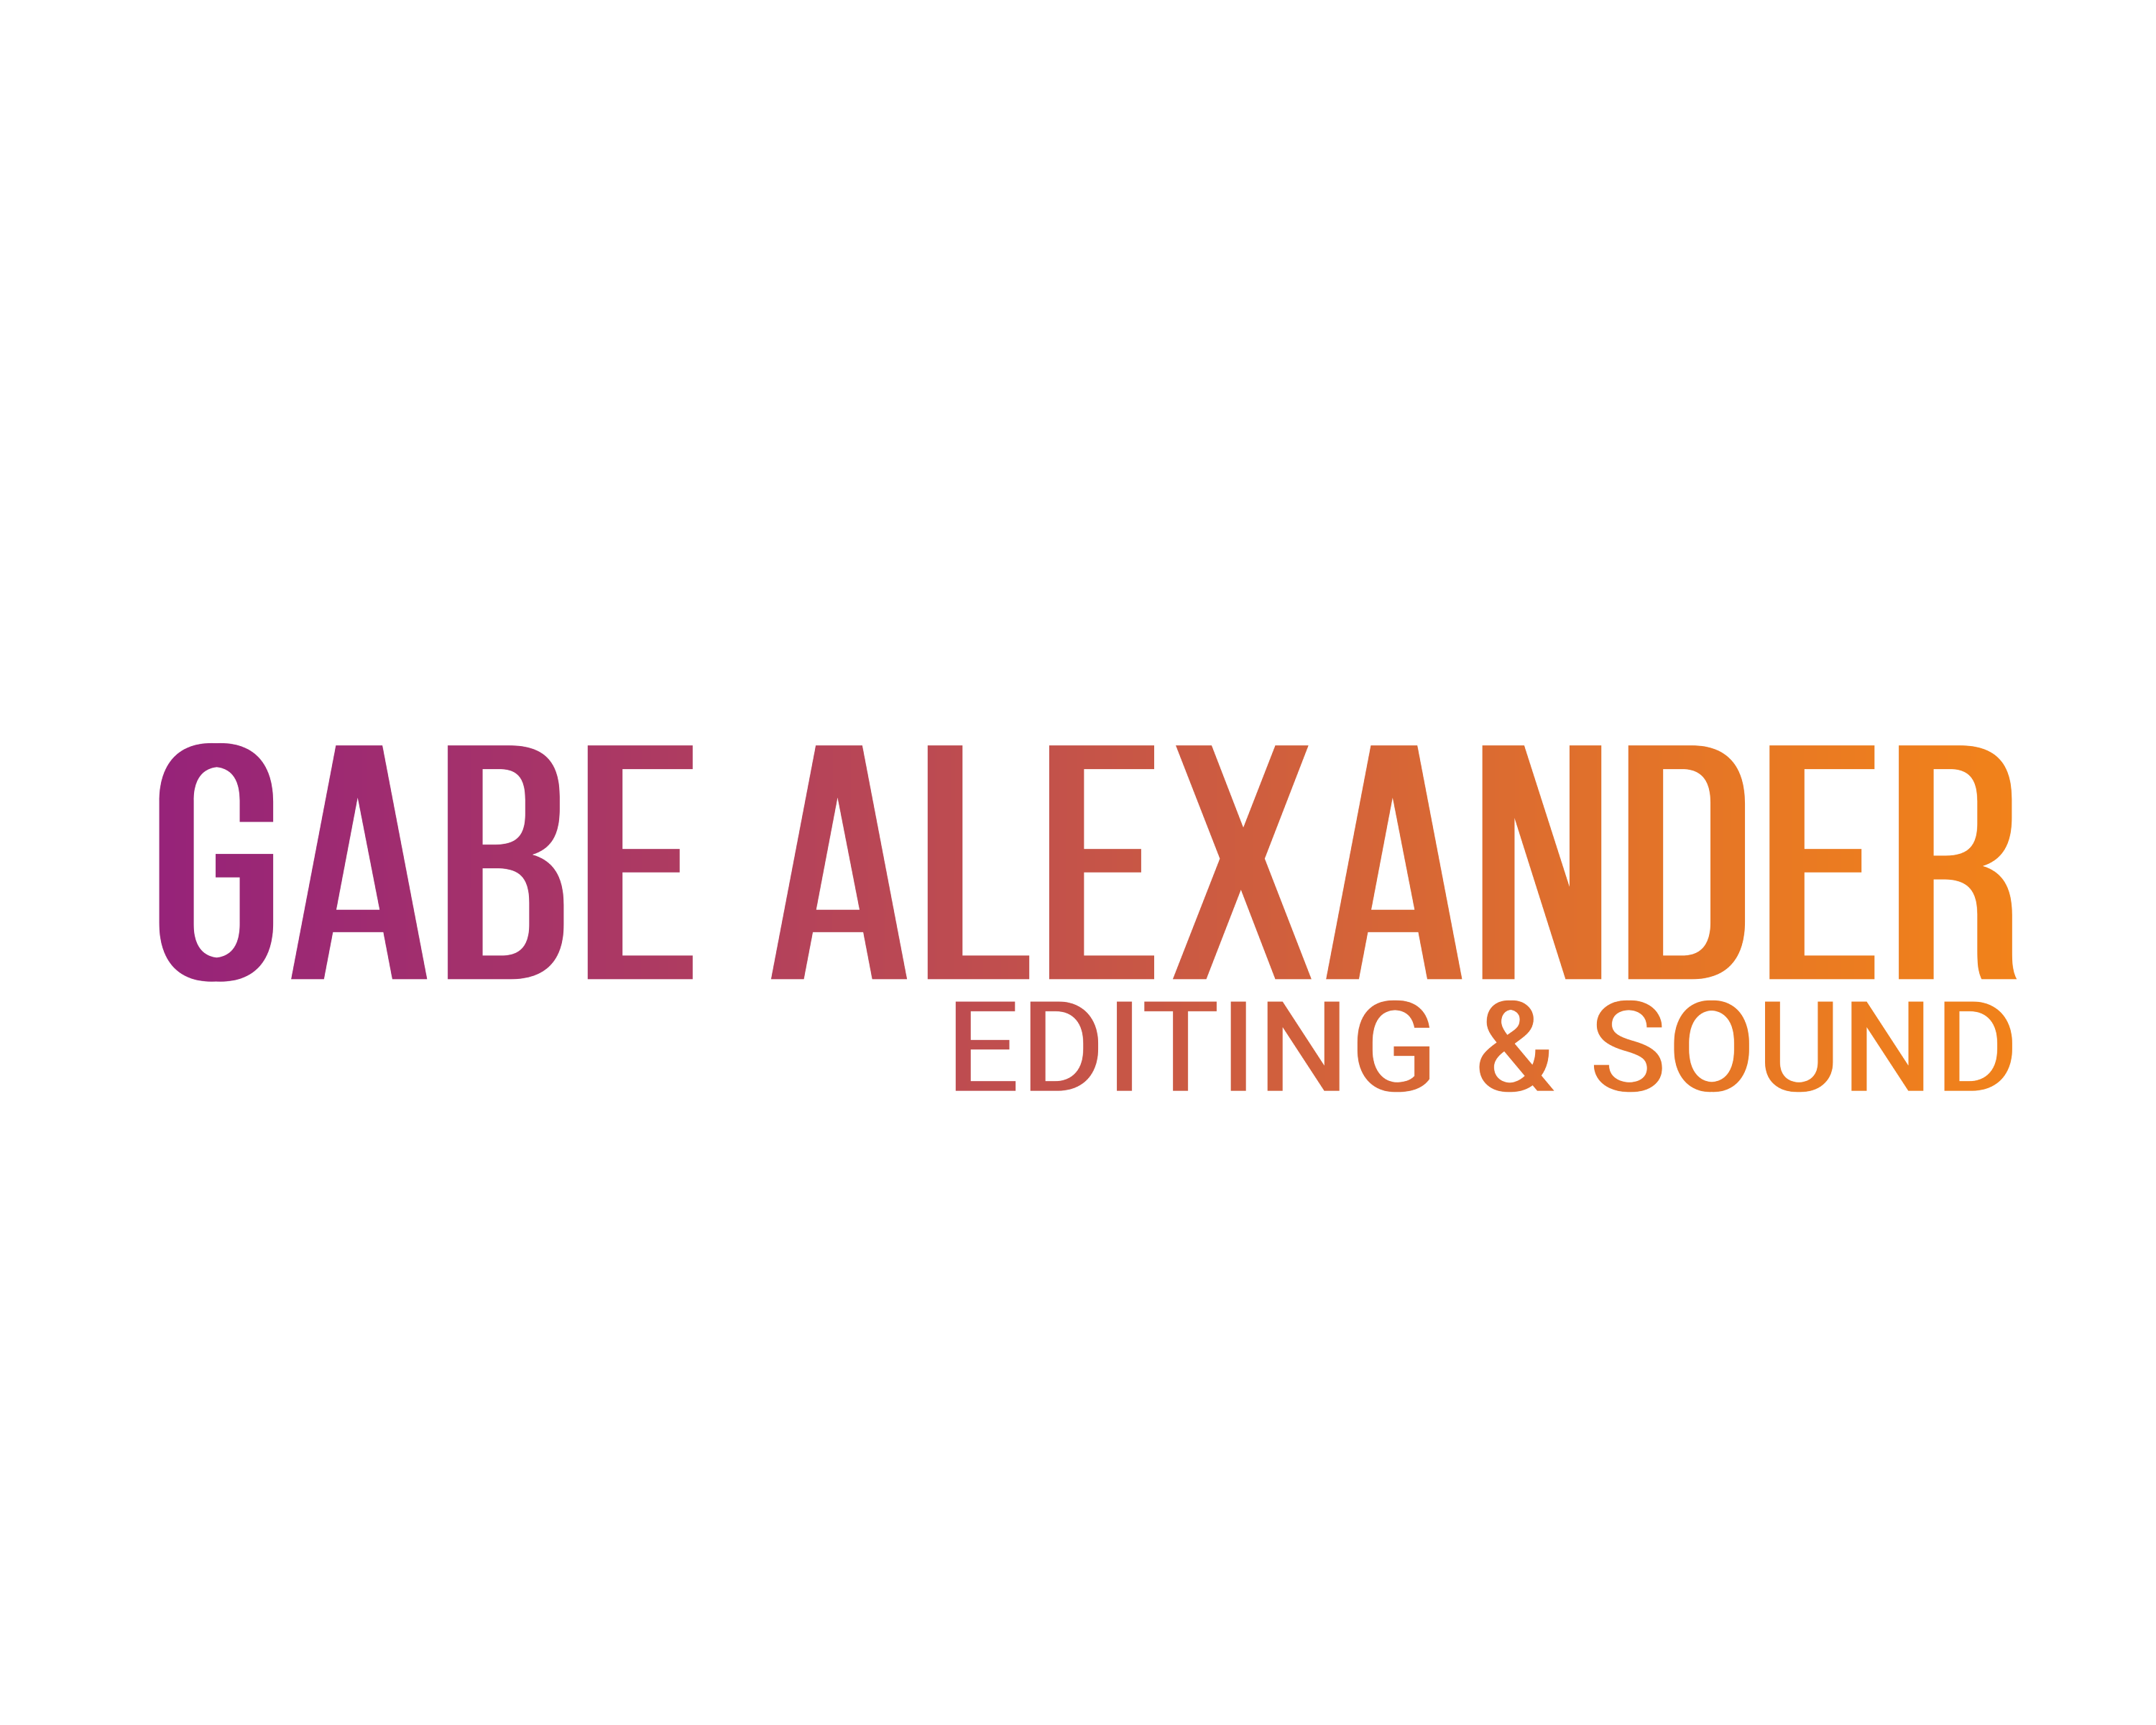 Gabe Alexander